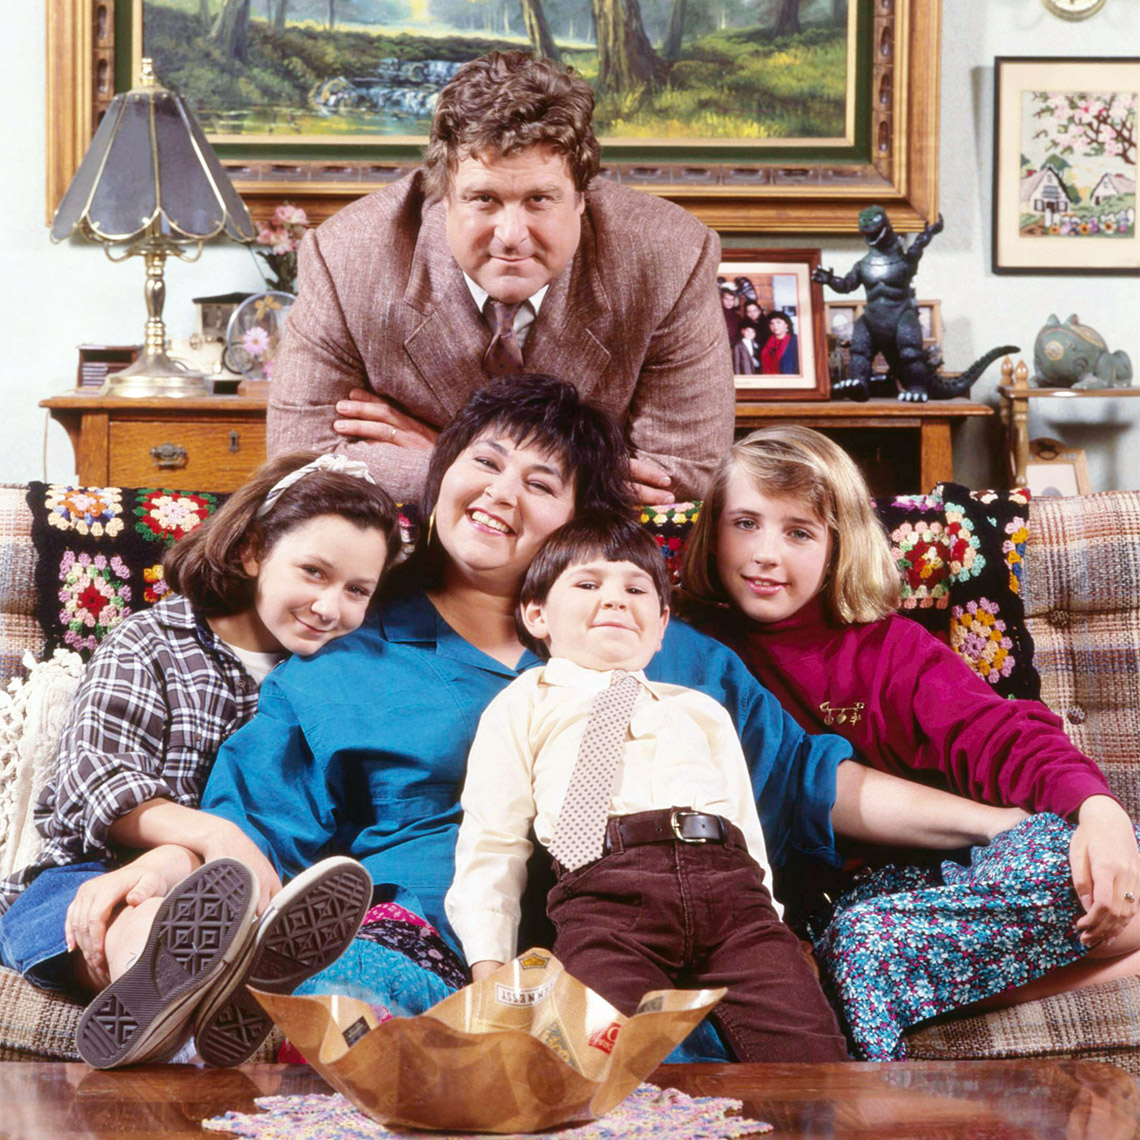 Original cast of Roseanne